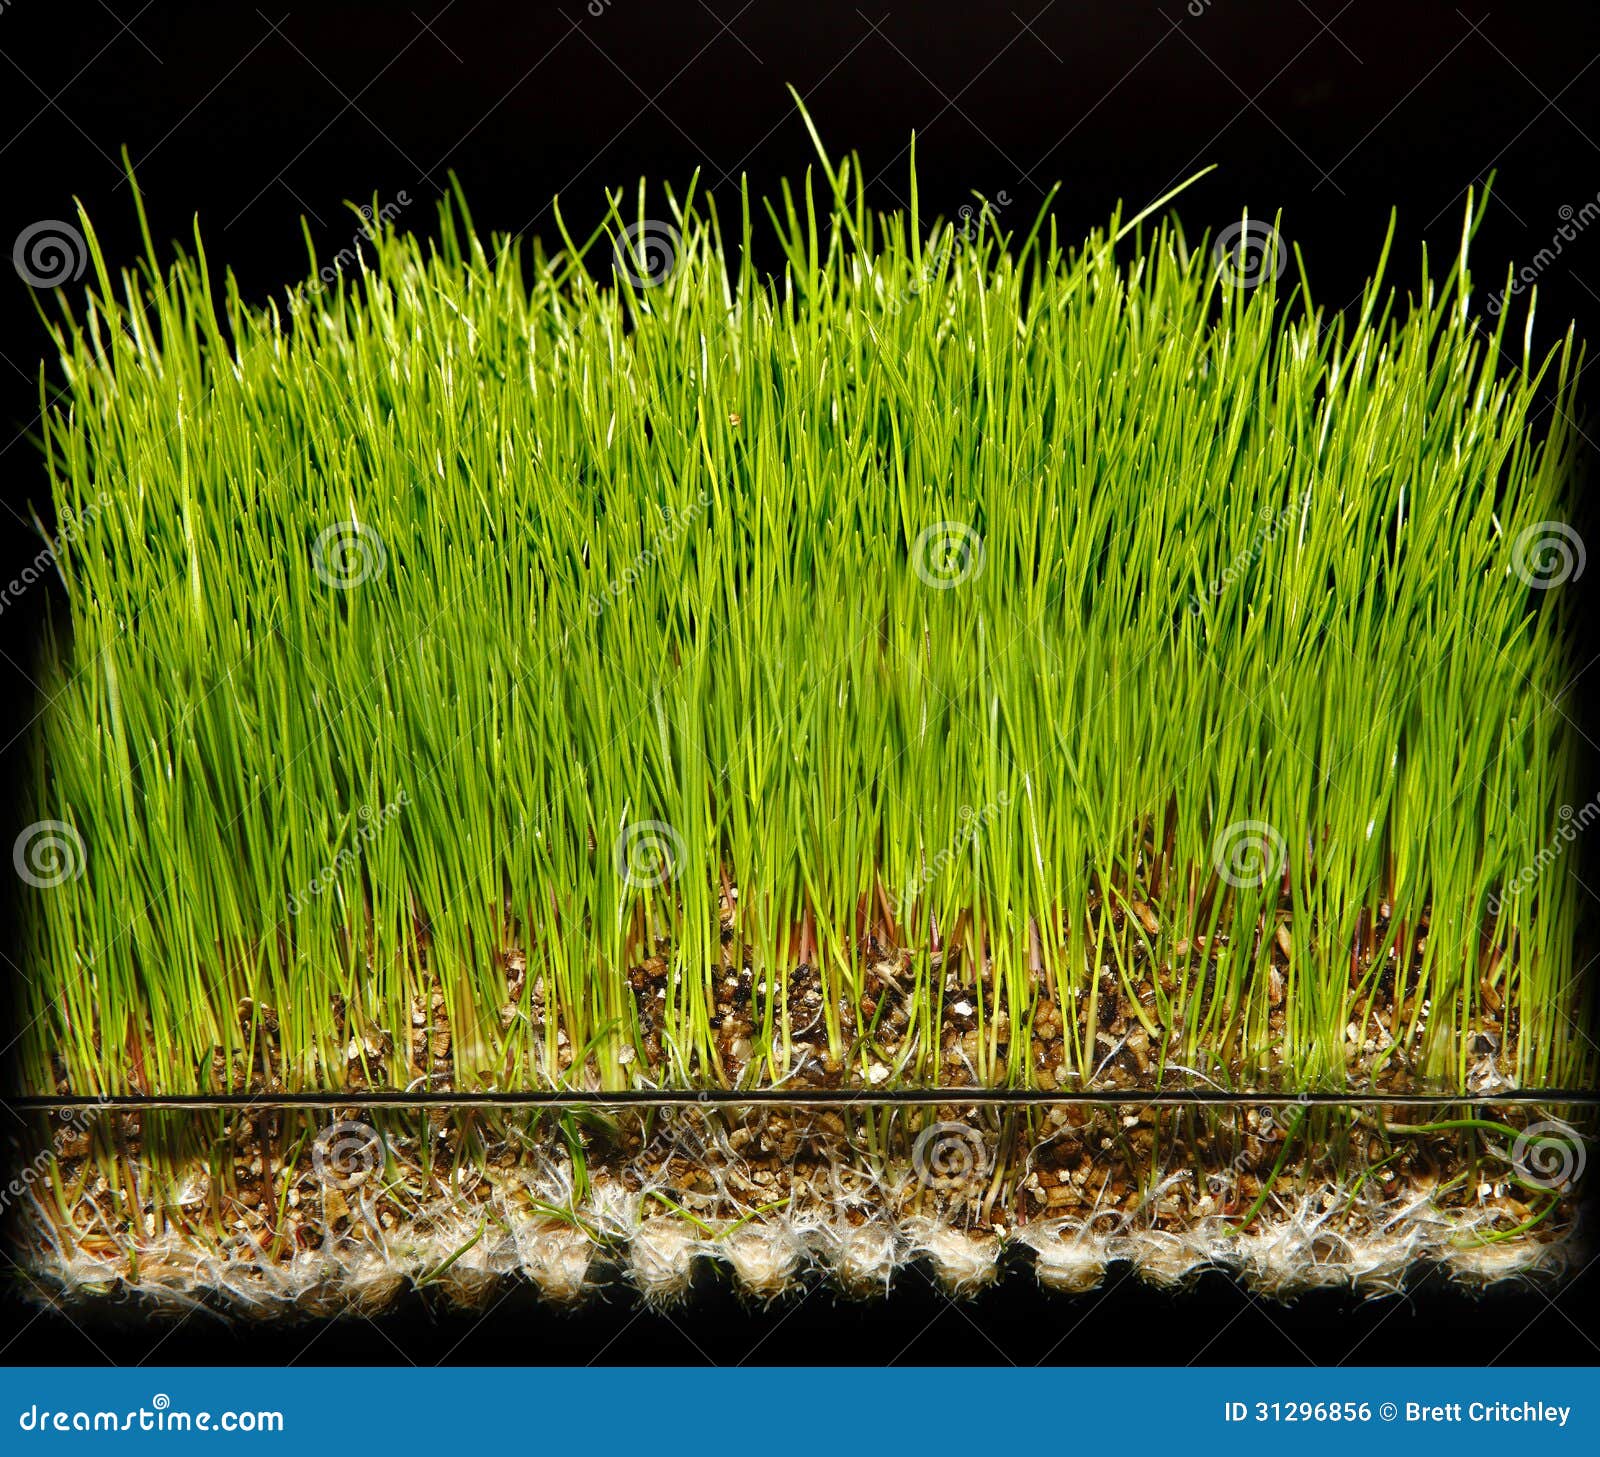 Hydroponic Gardening Grass Royalty Free Stock Image - Image: 31296856